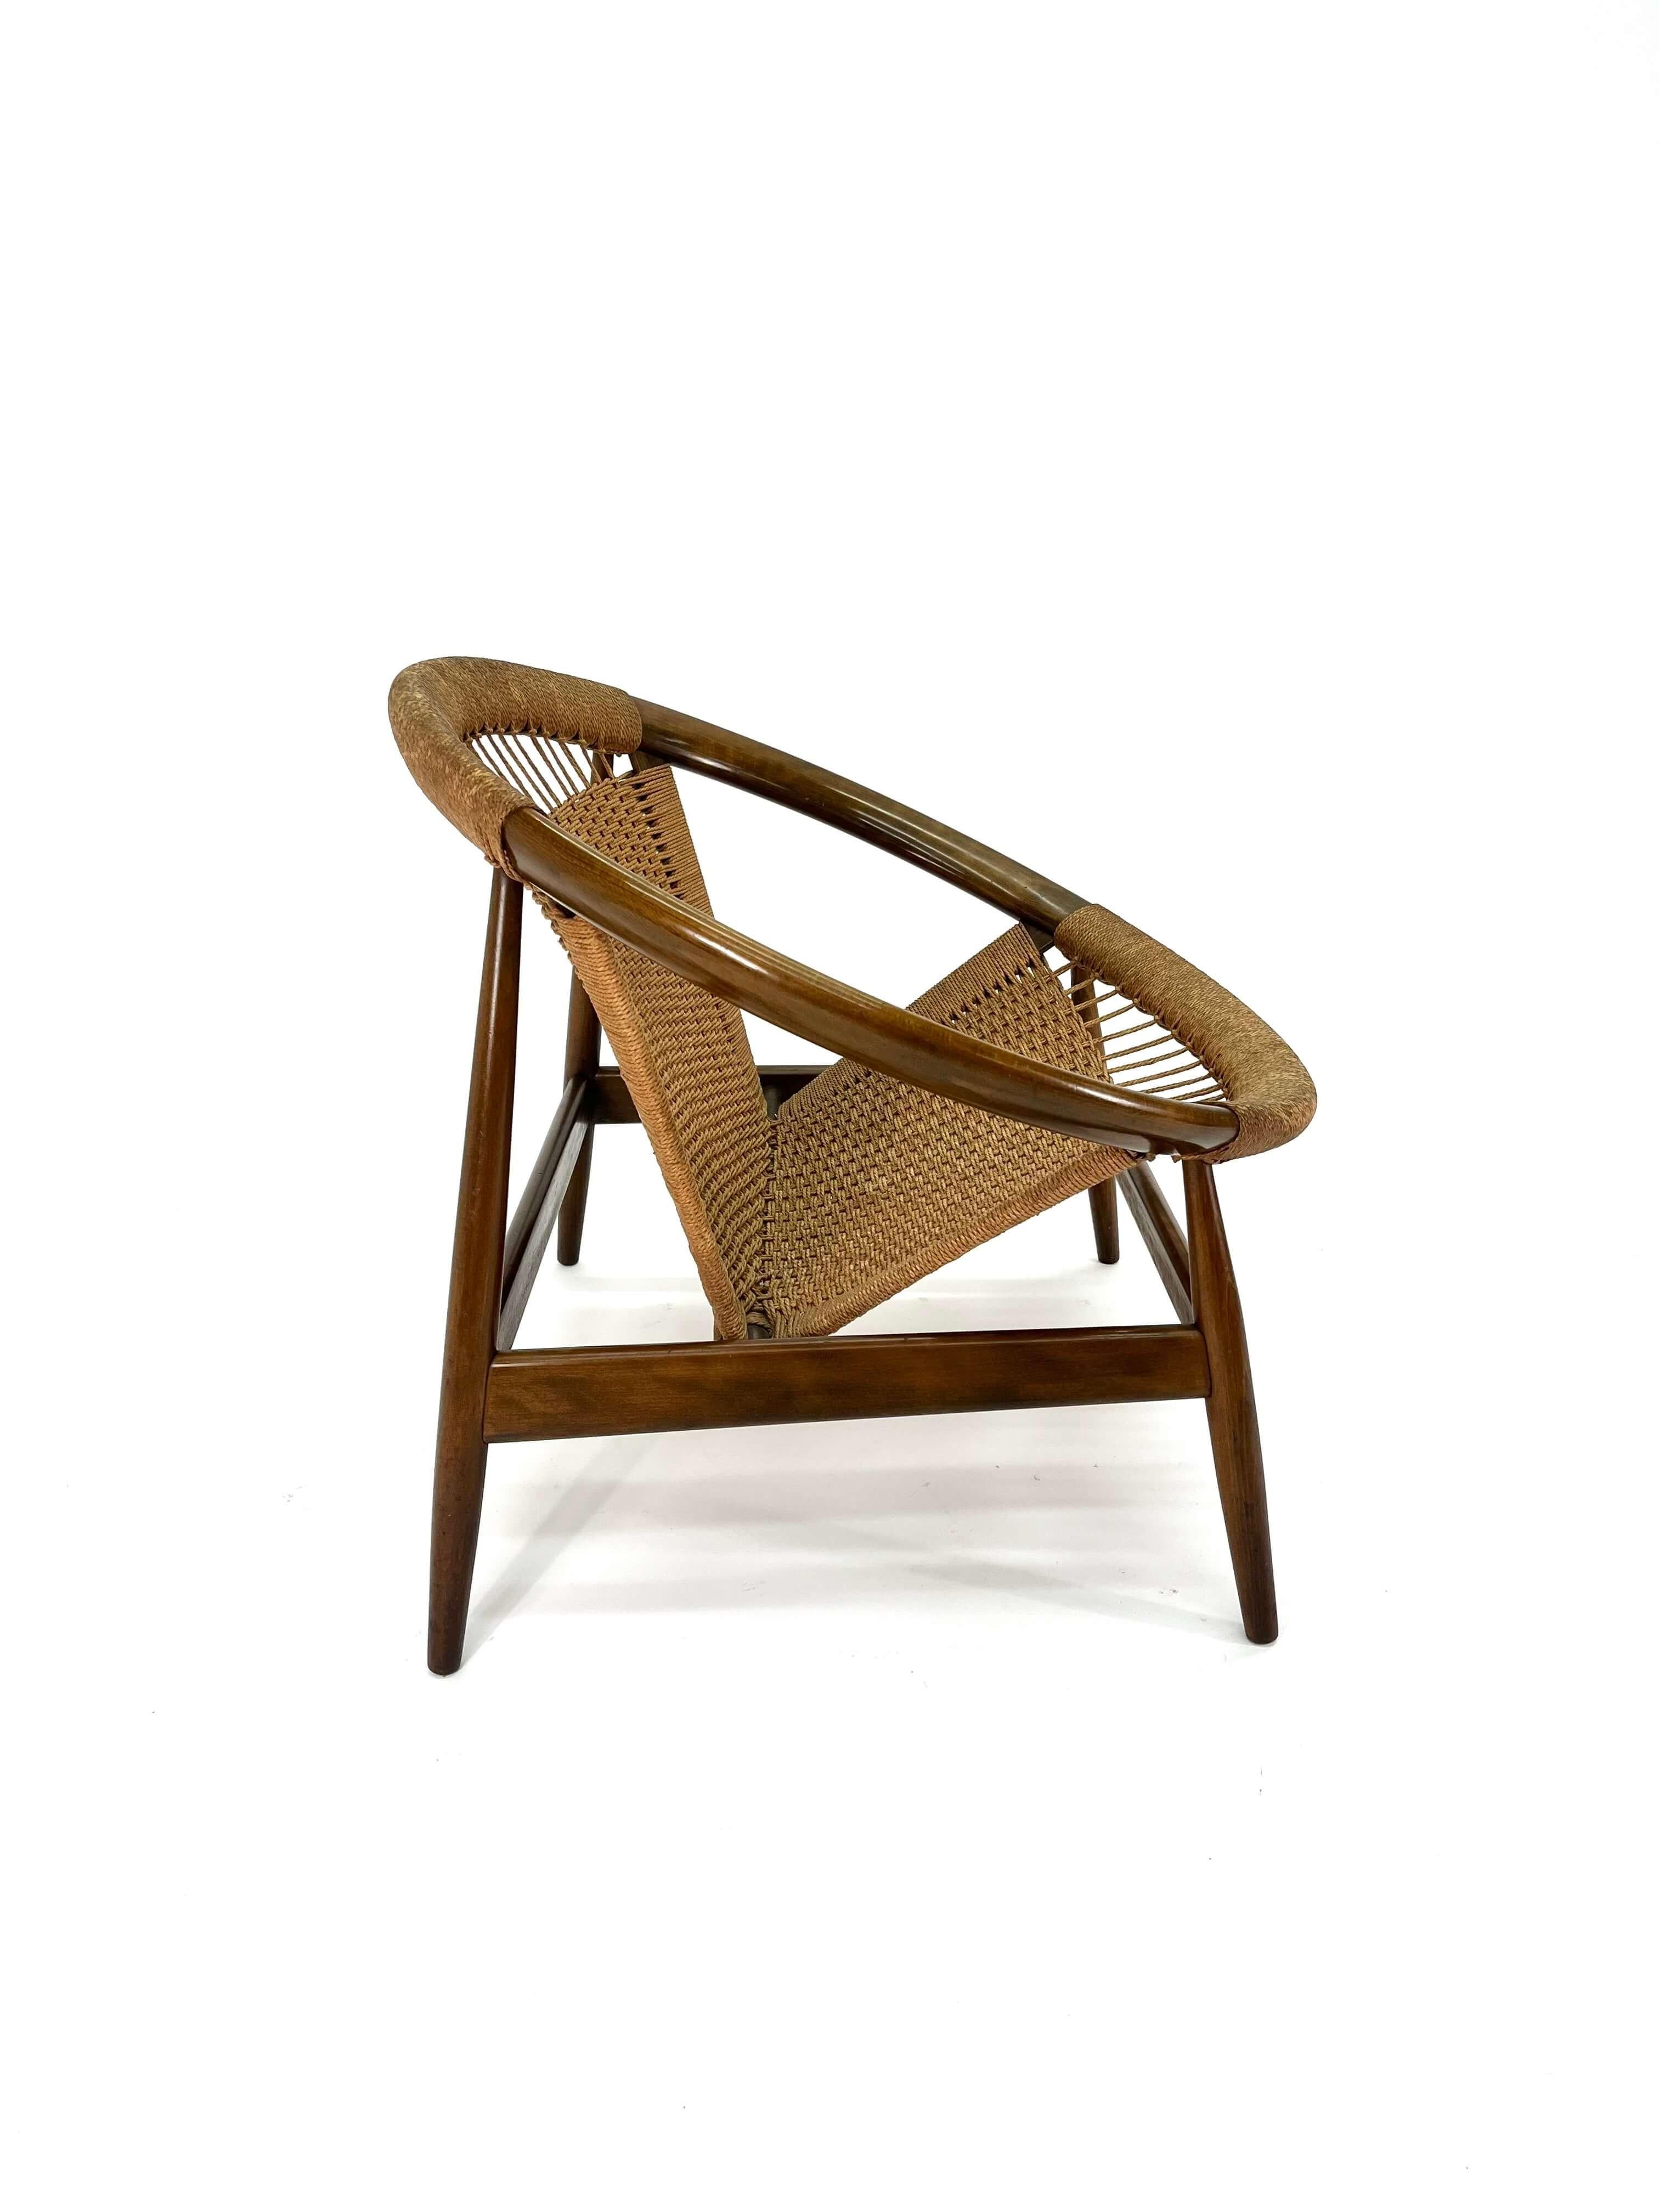 Scandinavian Modern Mid-Century Modern Ringstol Lounge Chair by Illum Wikkelsø For Sale